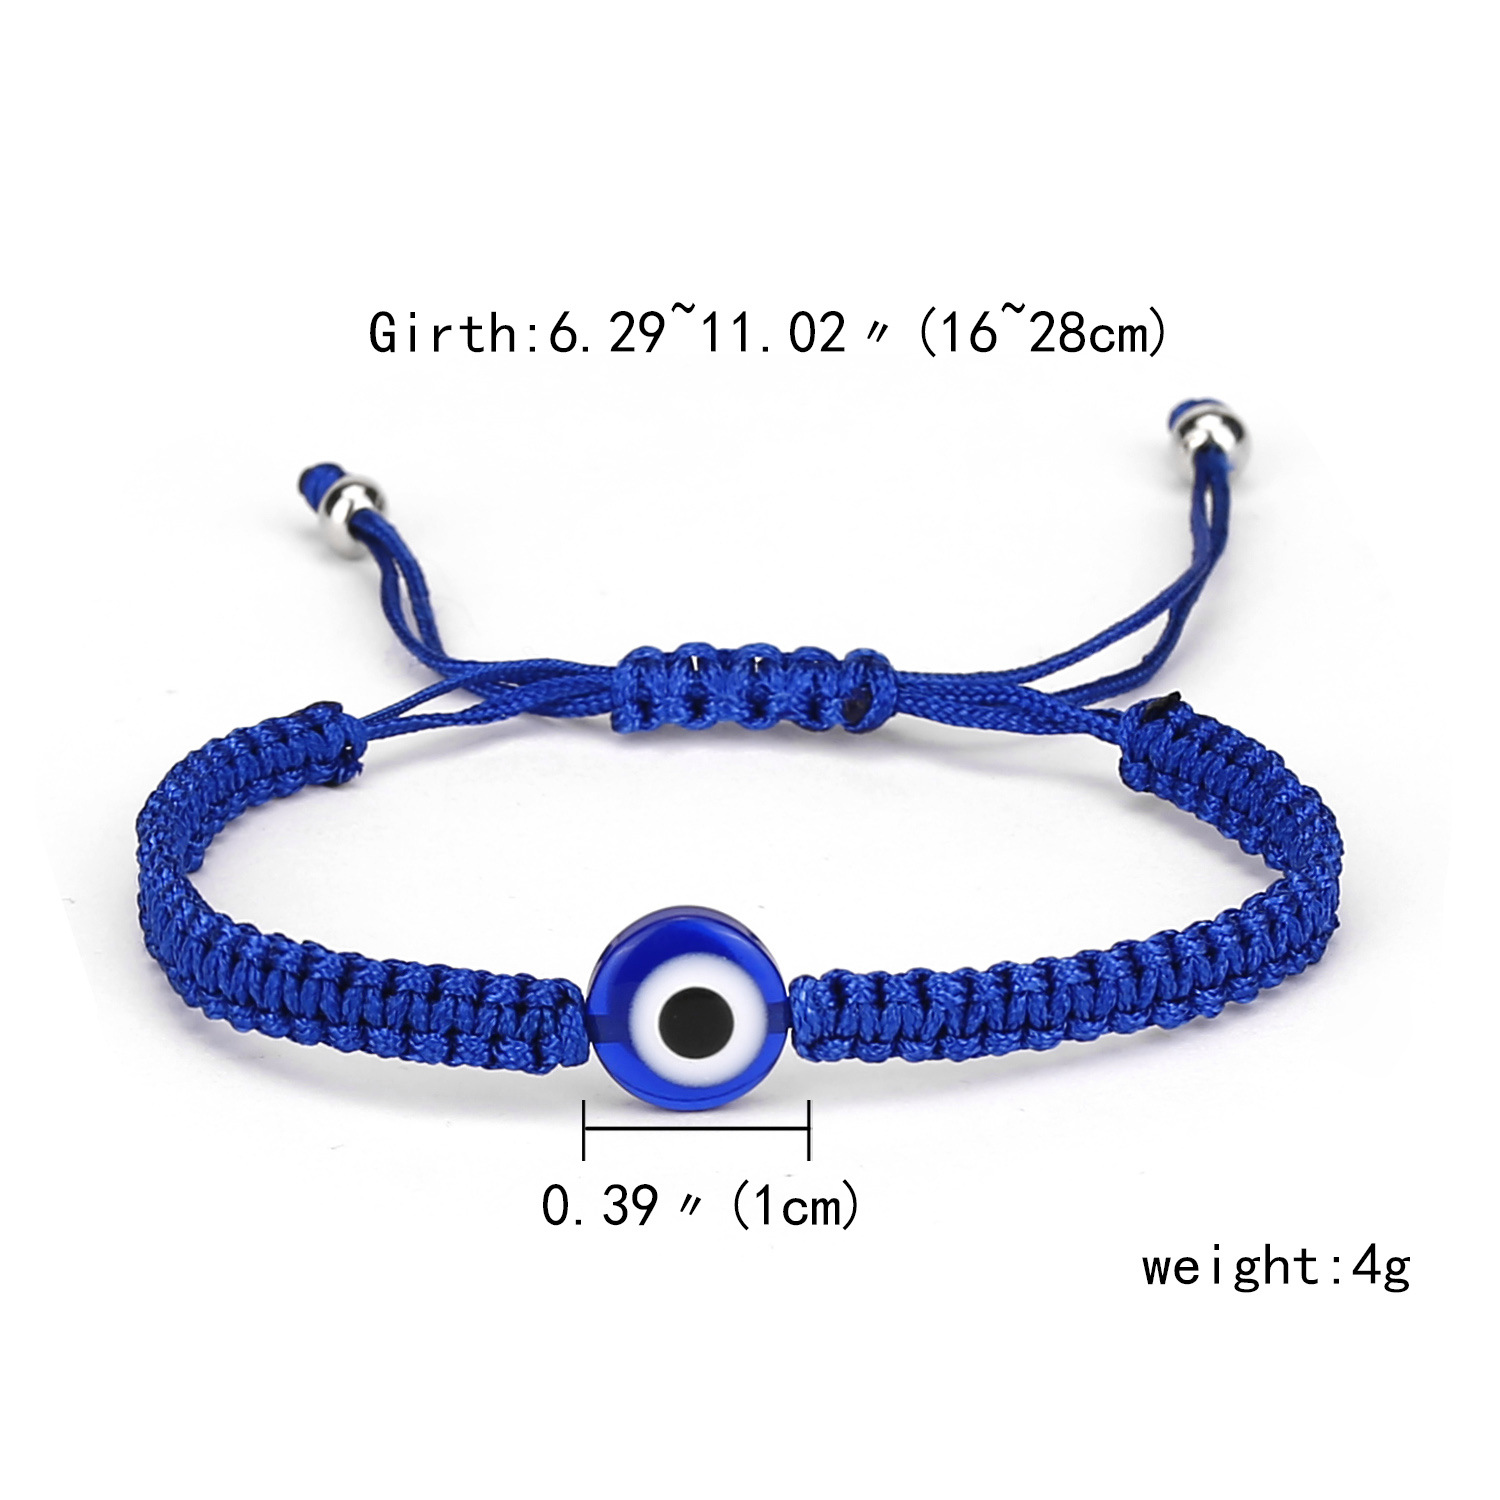 Mode verstellbares Armband kreatives neues blaues Auge Armband bses Auge rotes Seil geflochtenes Armbandpicture1